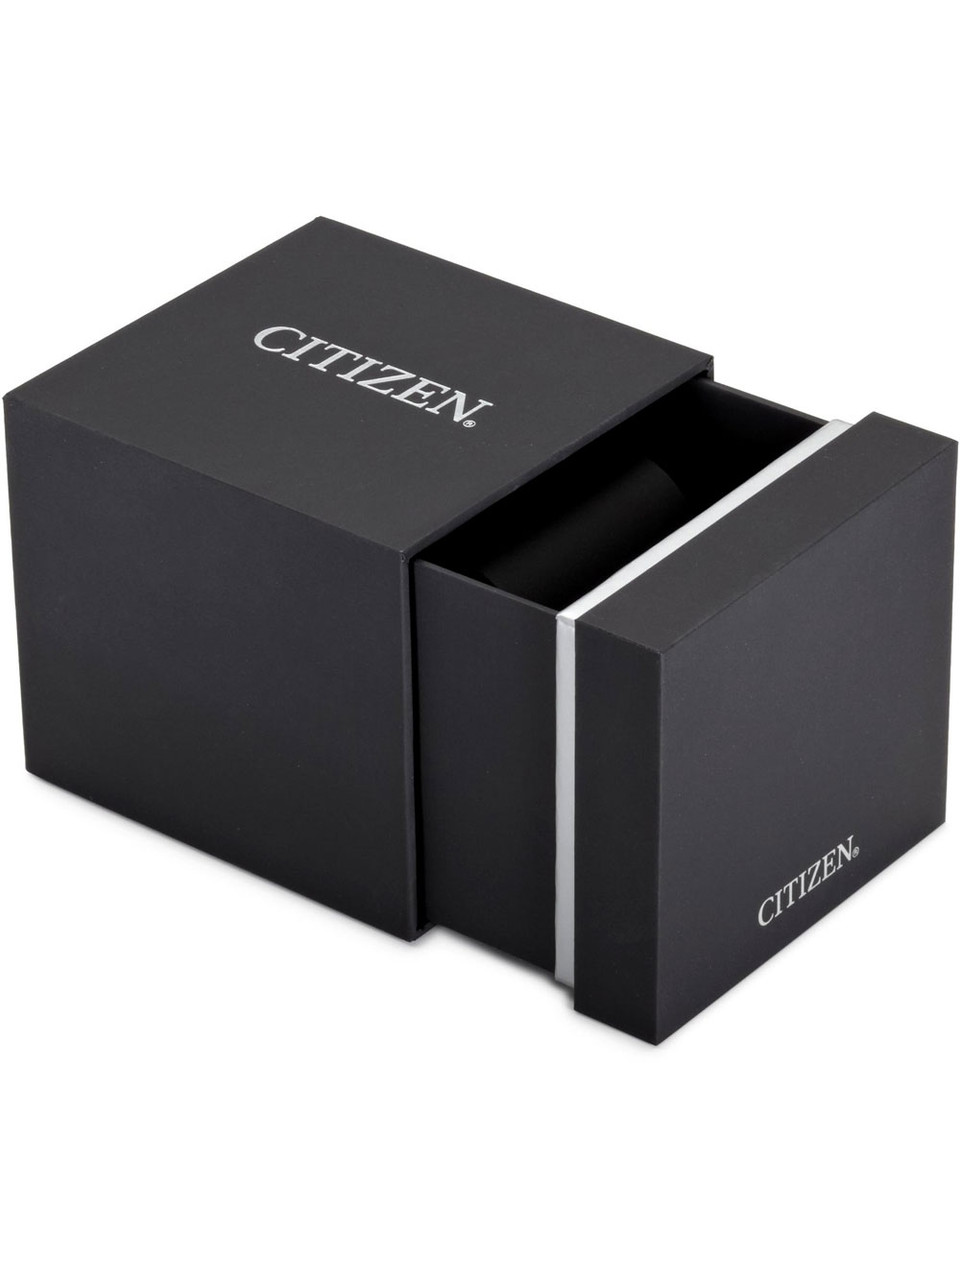 Citizen CA0700-86L owlica Watches 10 - Genuine | Super-Titanium 43mm Chronograph Eco-Drive ATM